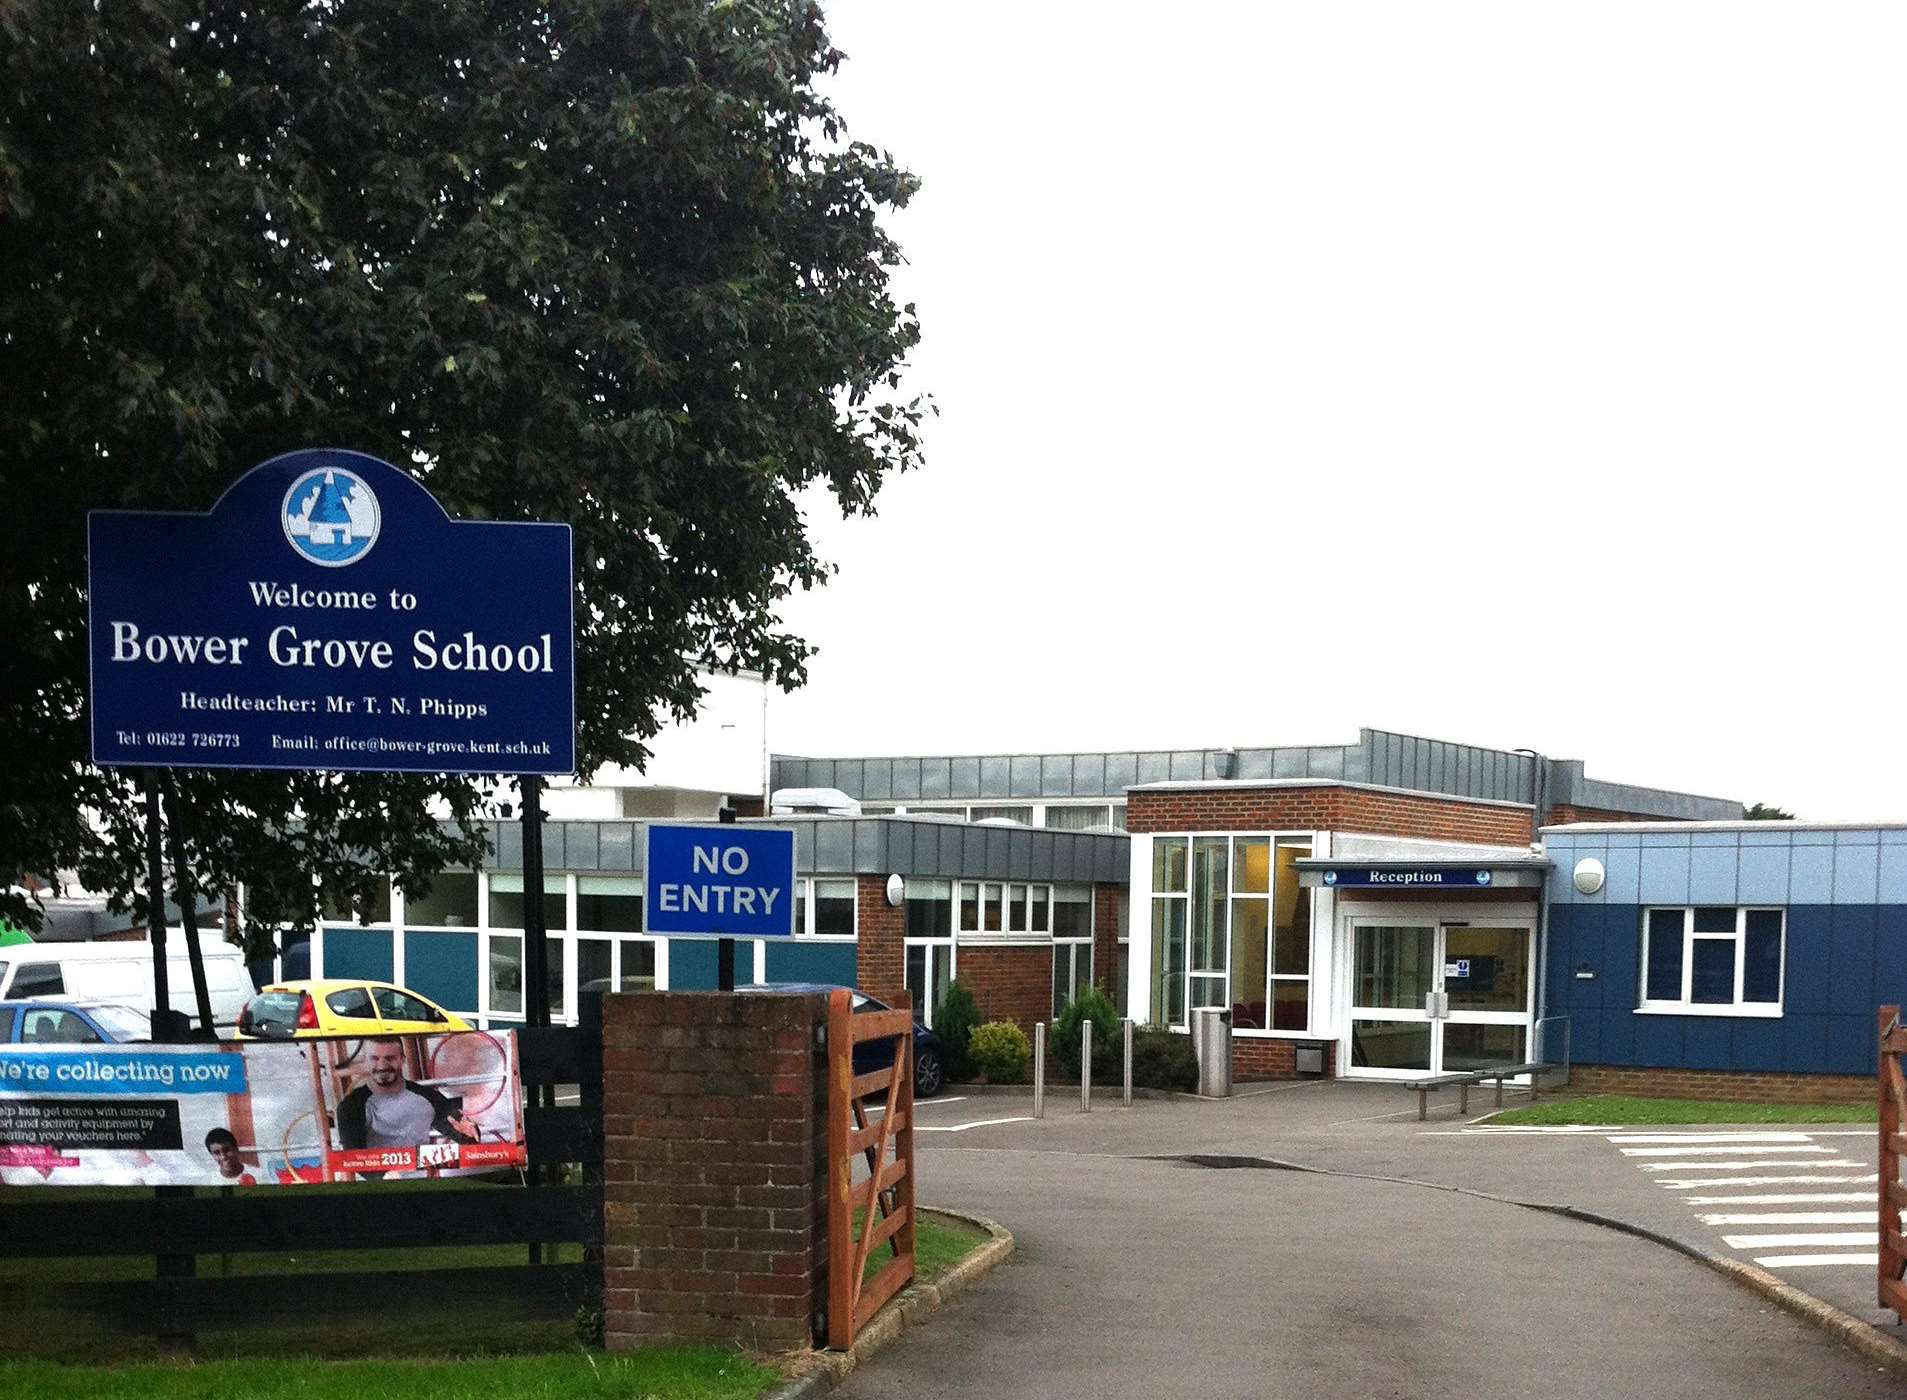 Bower Grove School is in Fant Lane, Maidstone